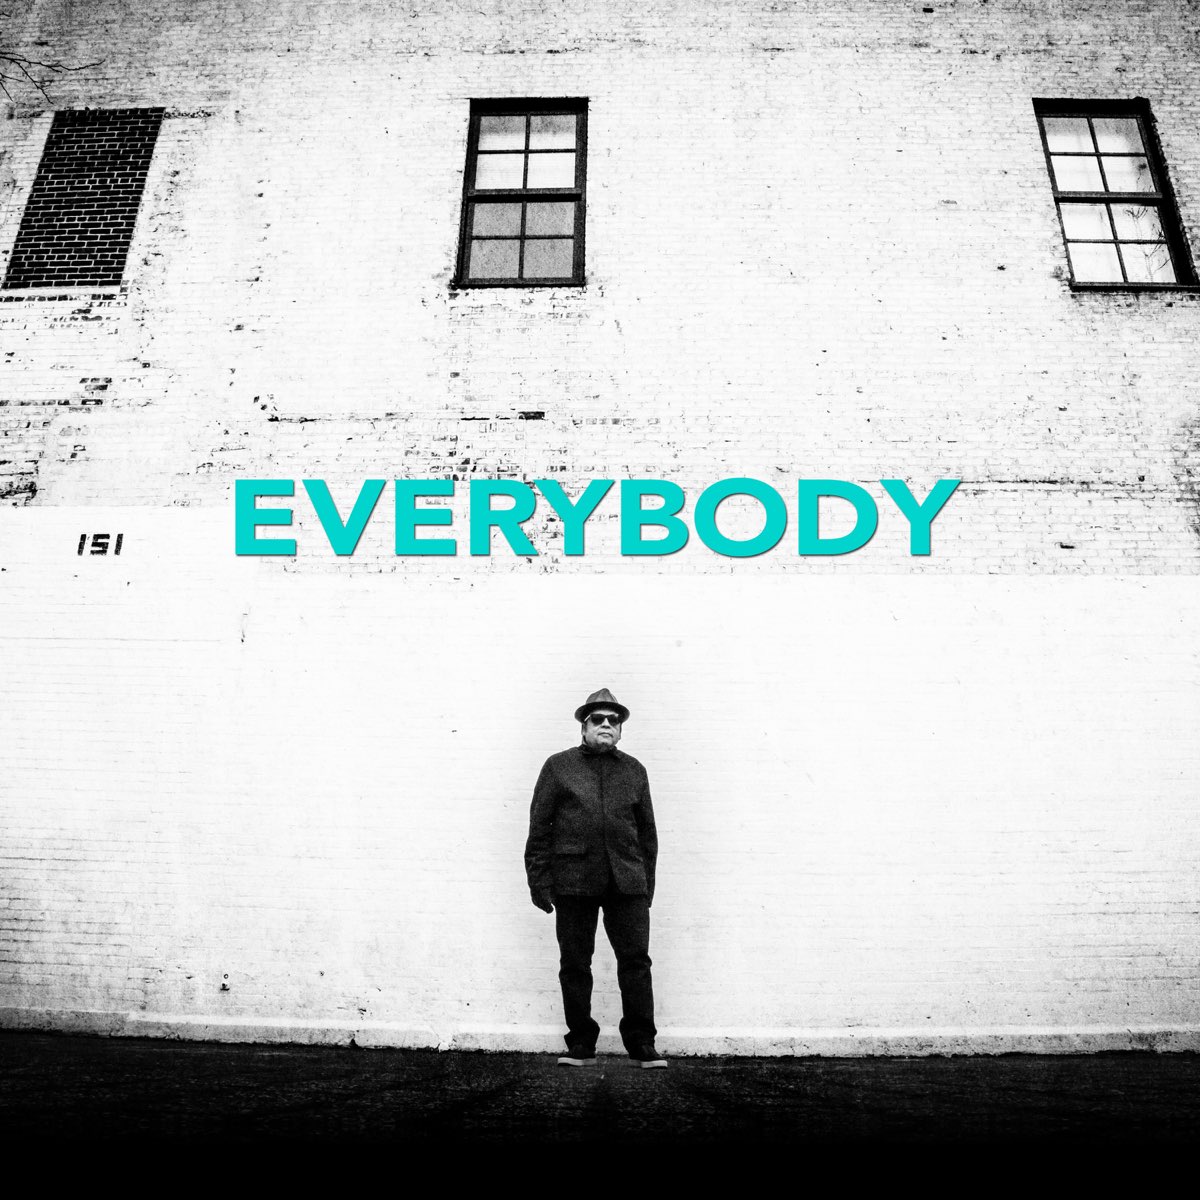 Everybody everybody song. Everybody Music. Песня Everybody Everybody из тик тока.